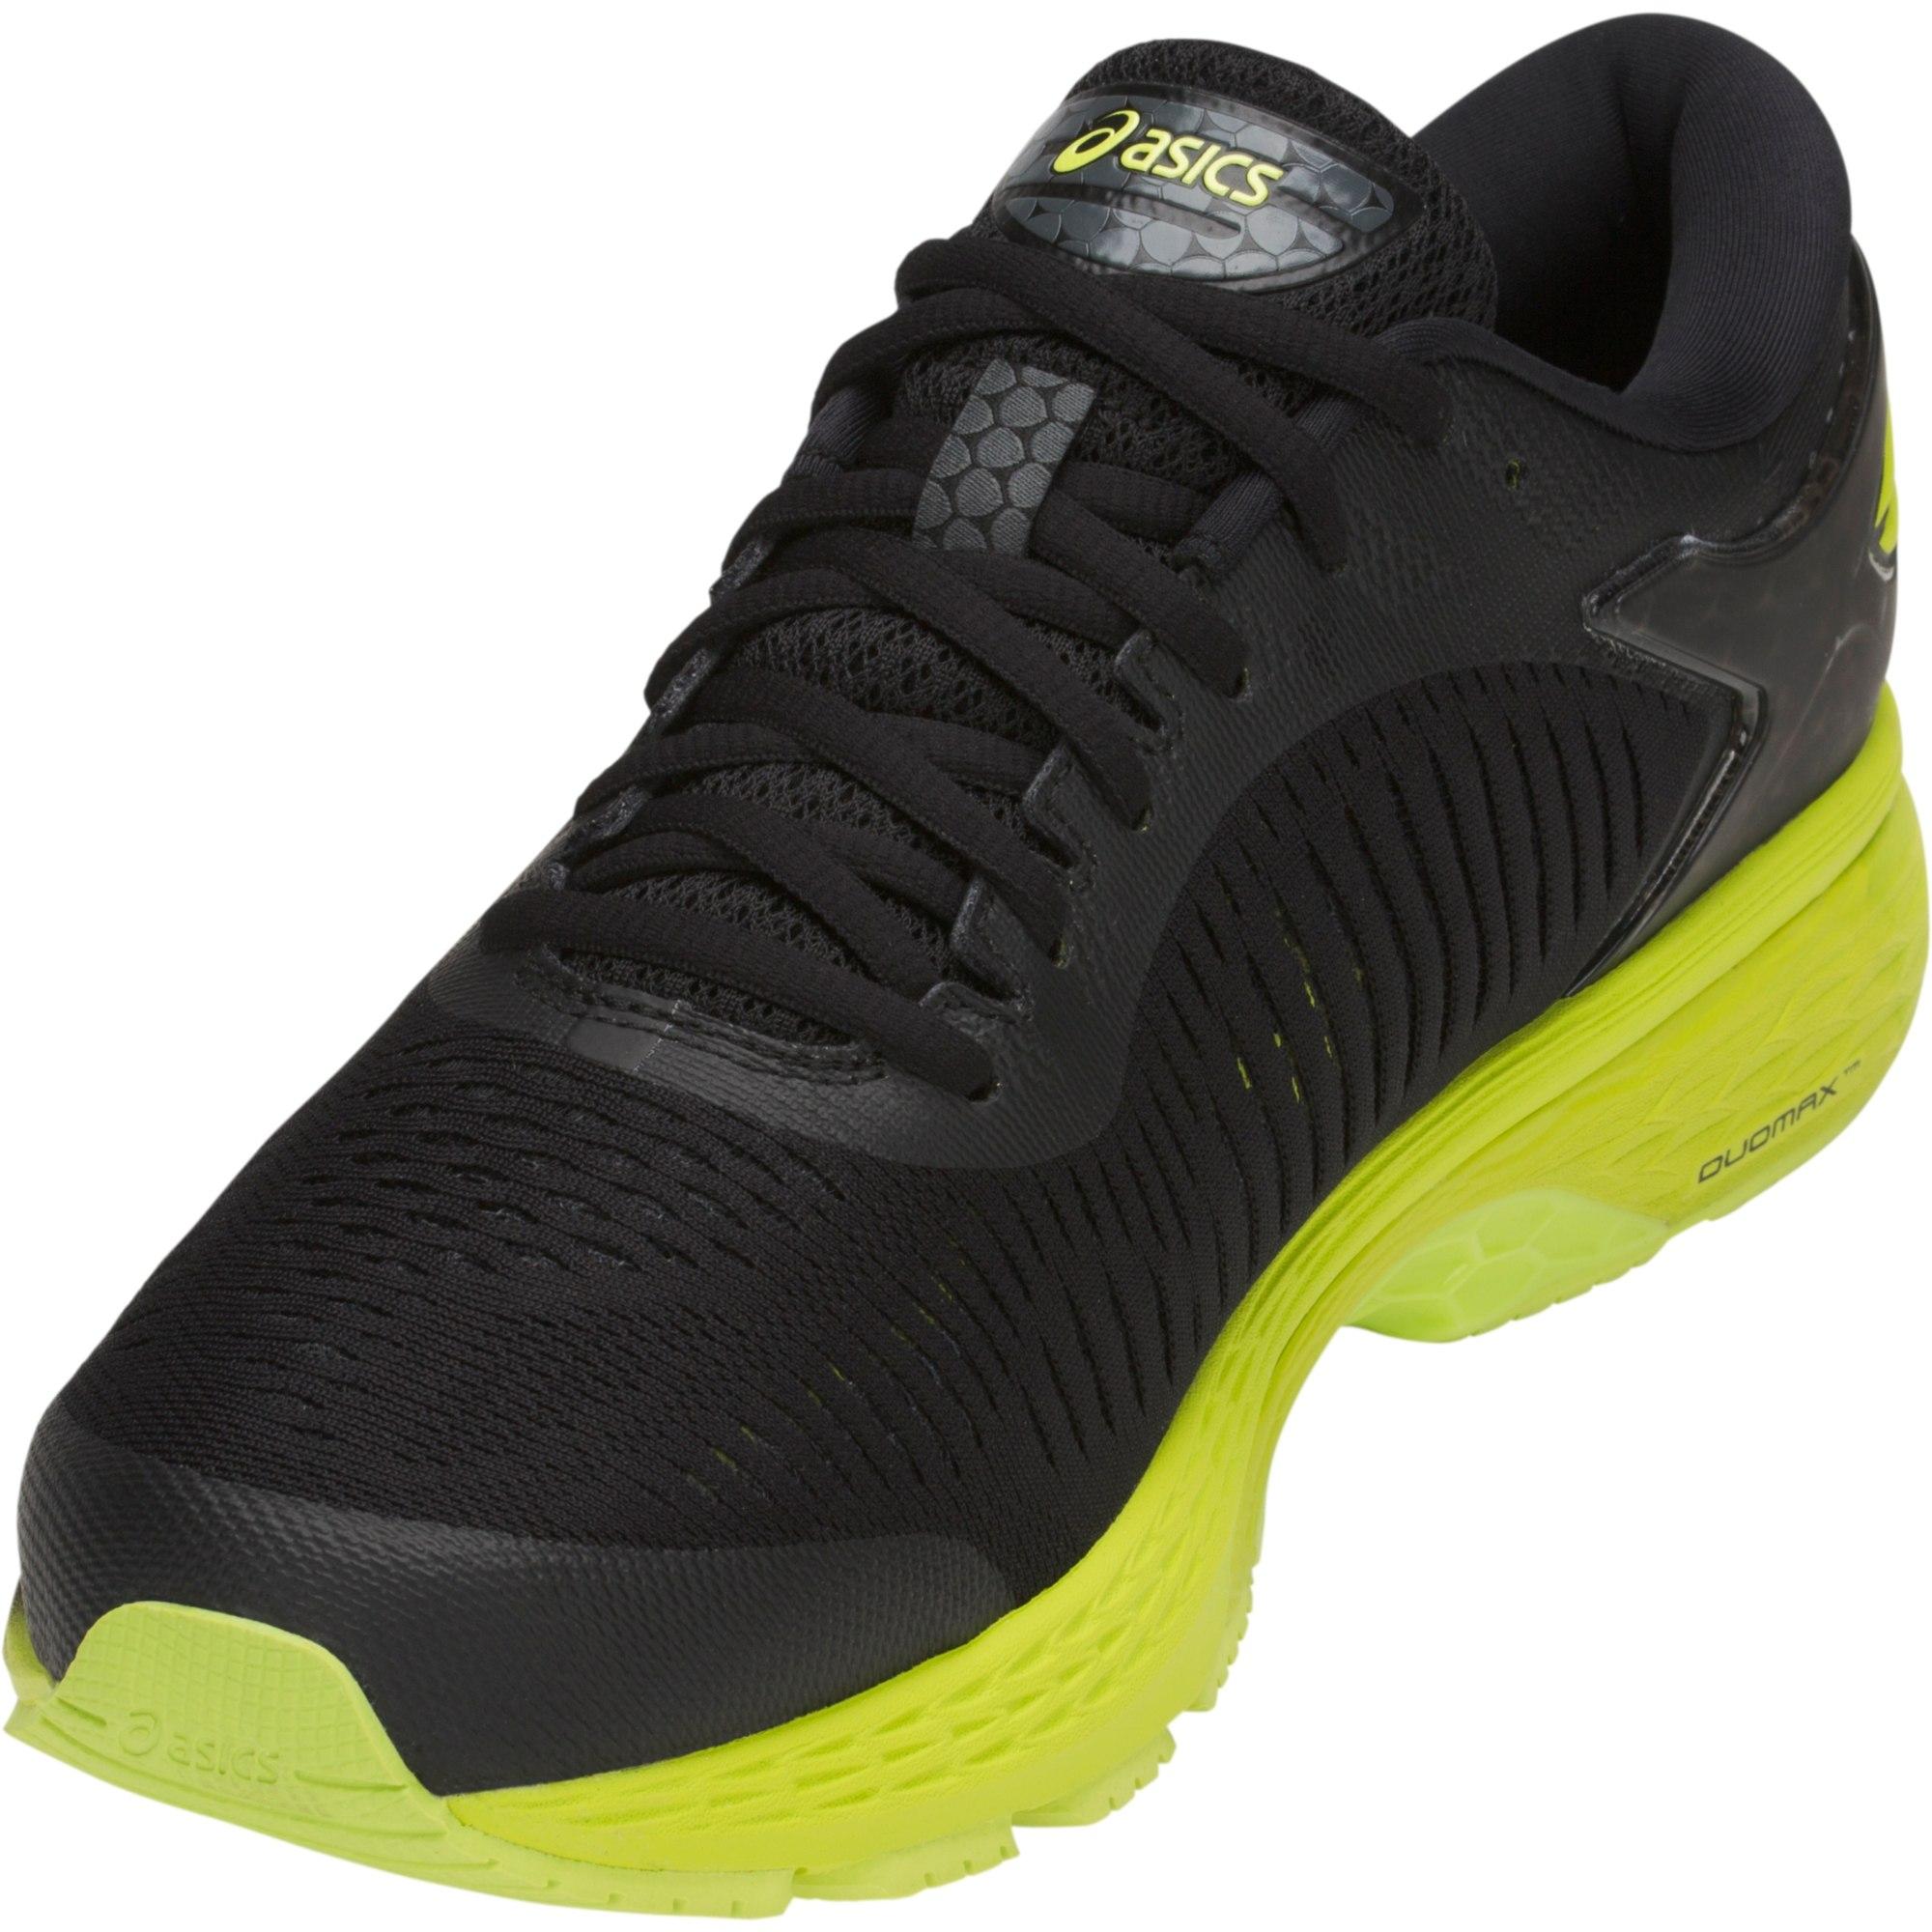 Asics Mens GEL-Kayano 25 Running Shoes - Black/Neon Lime - Tennisnuts.com